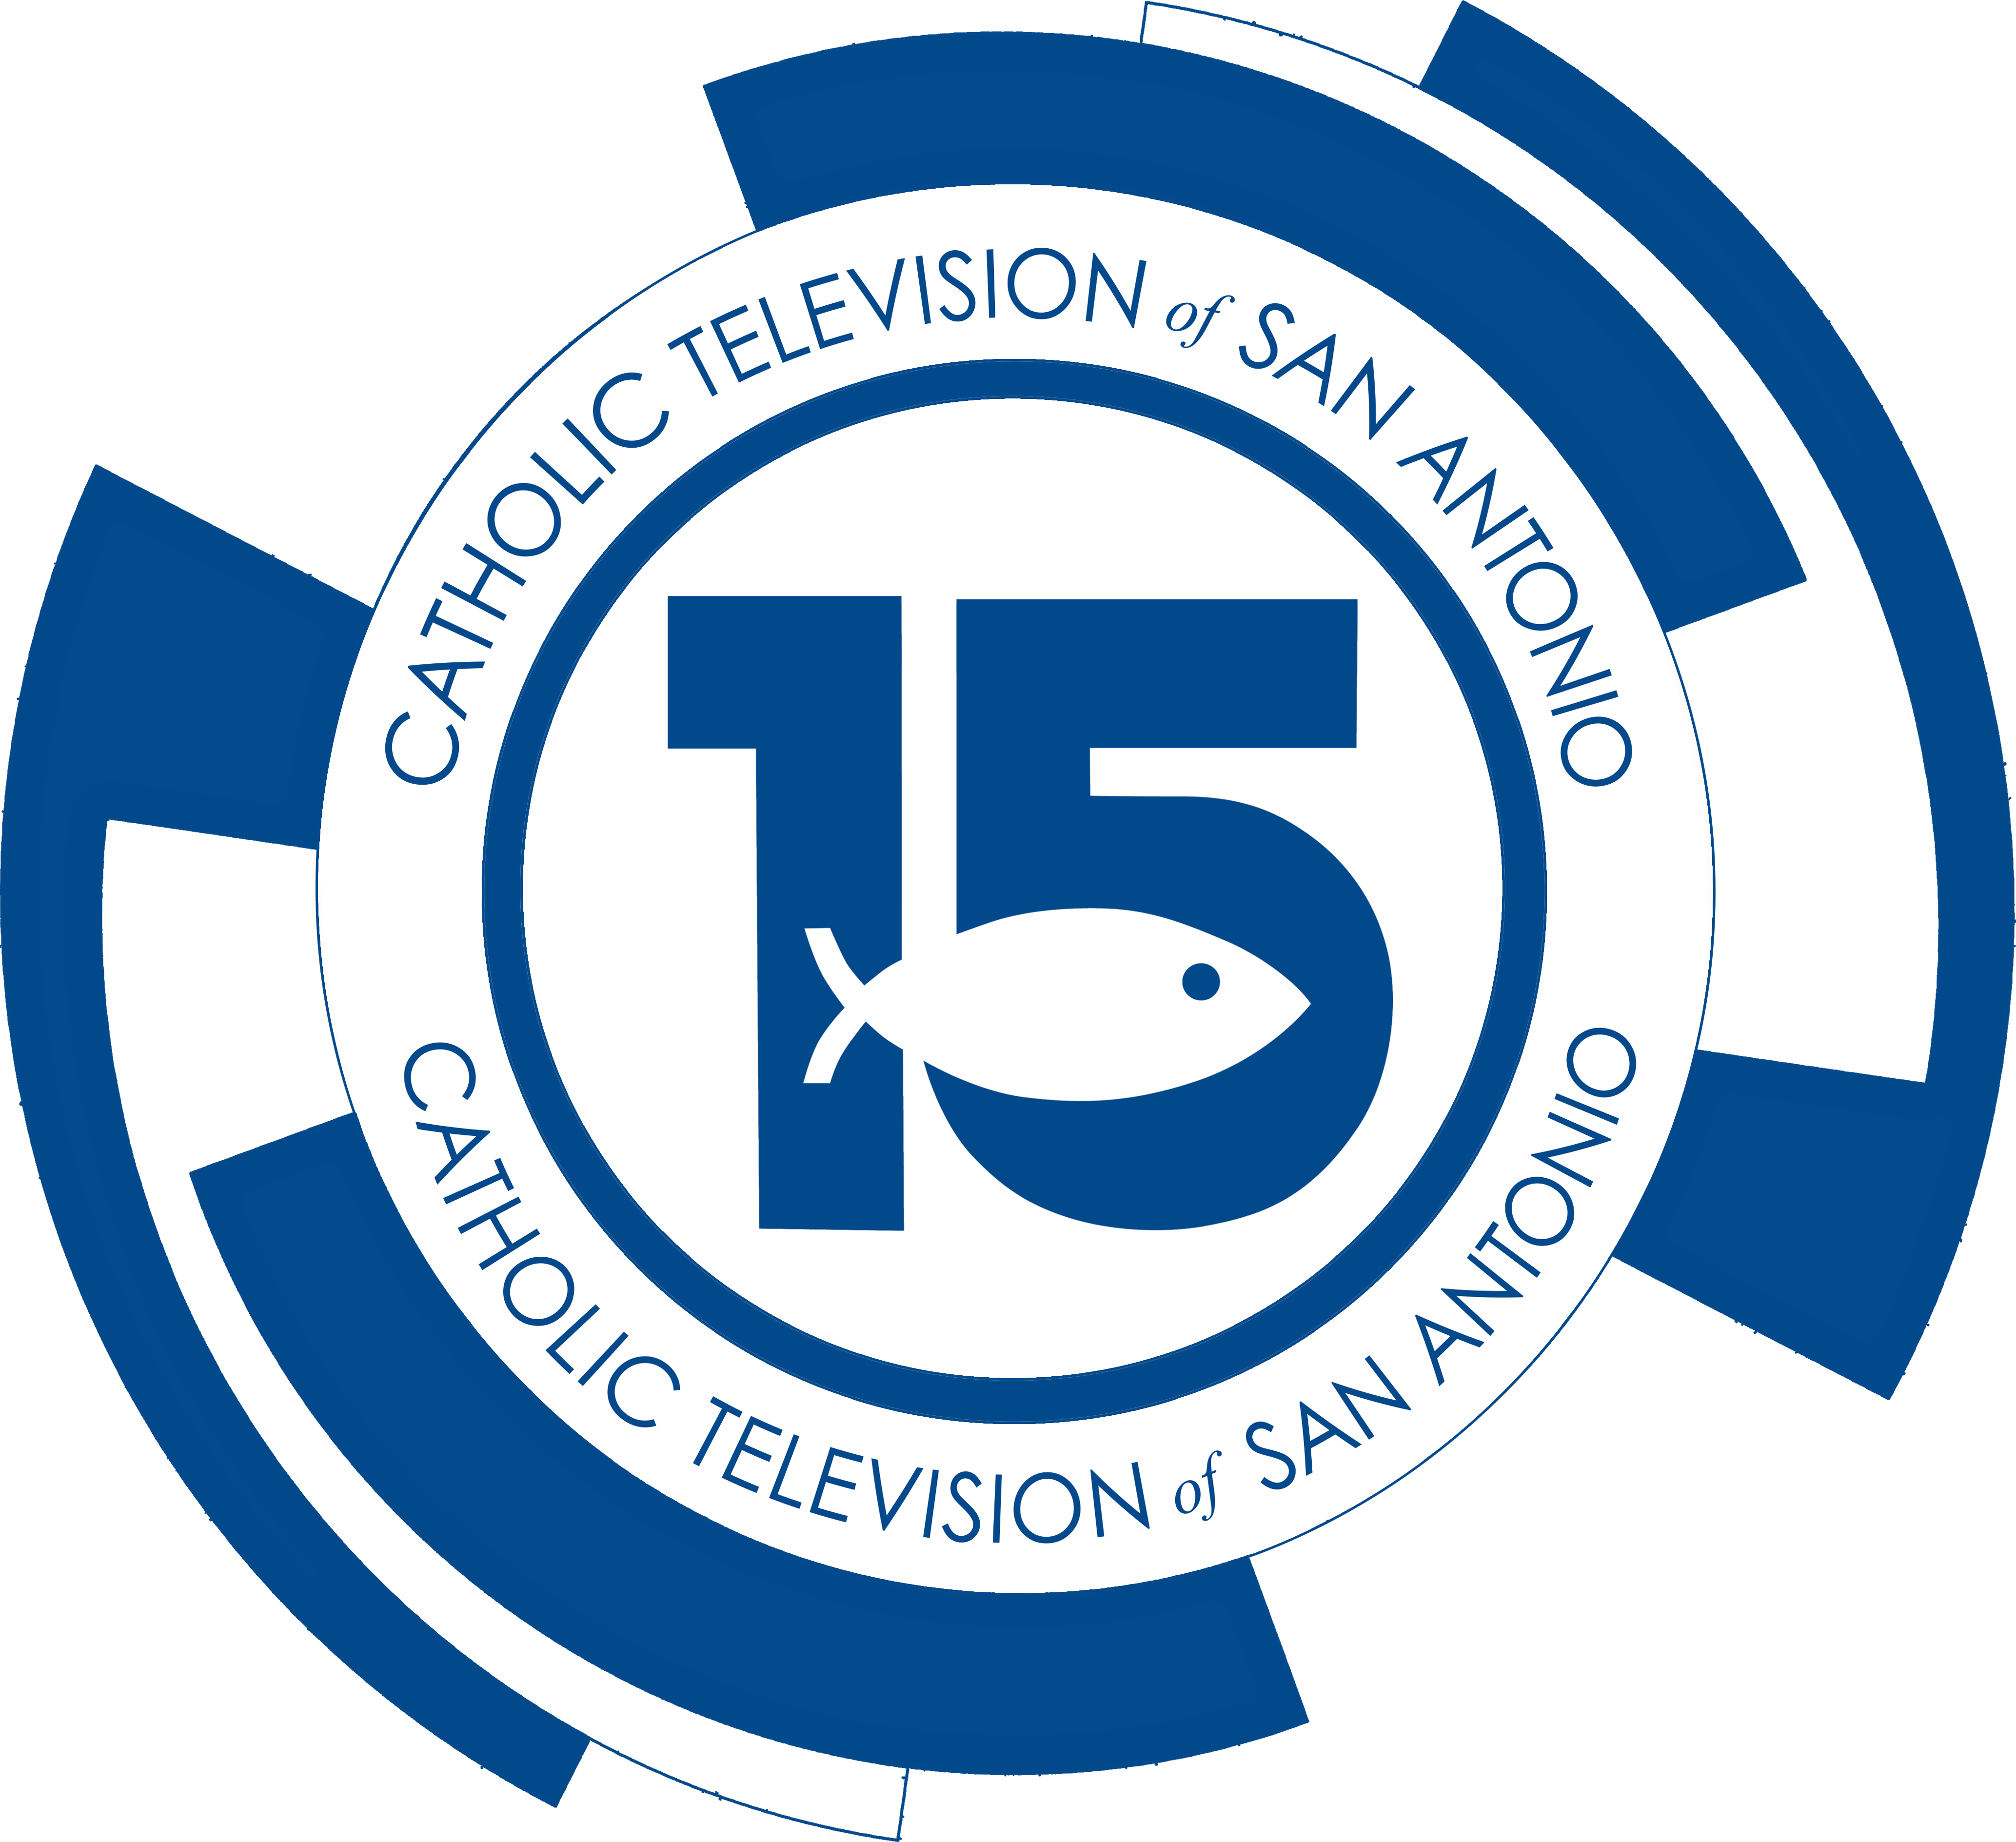 Archdiocese / Catholic Television of San Antonio - CTSA - organization logo